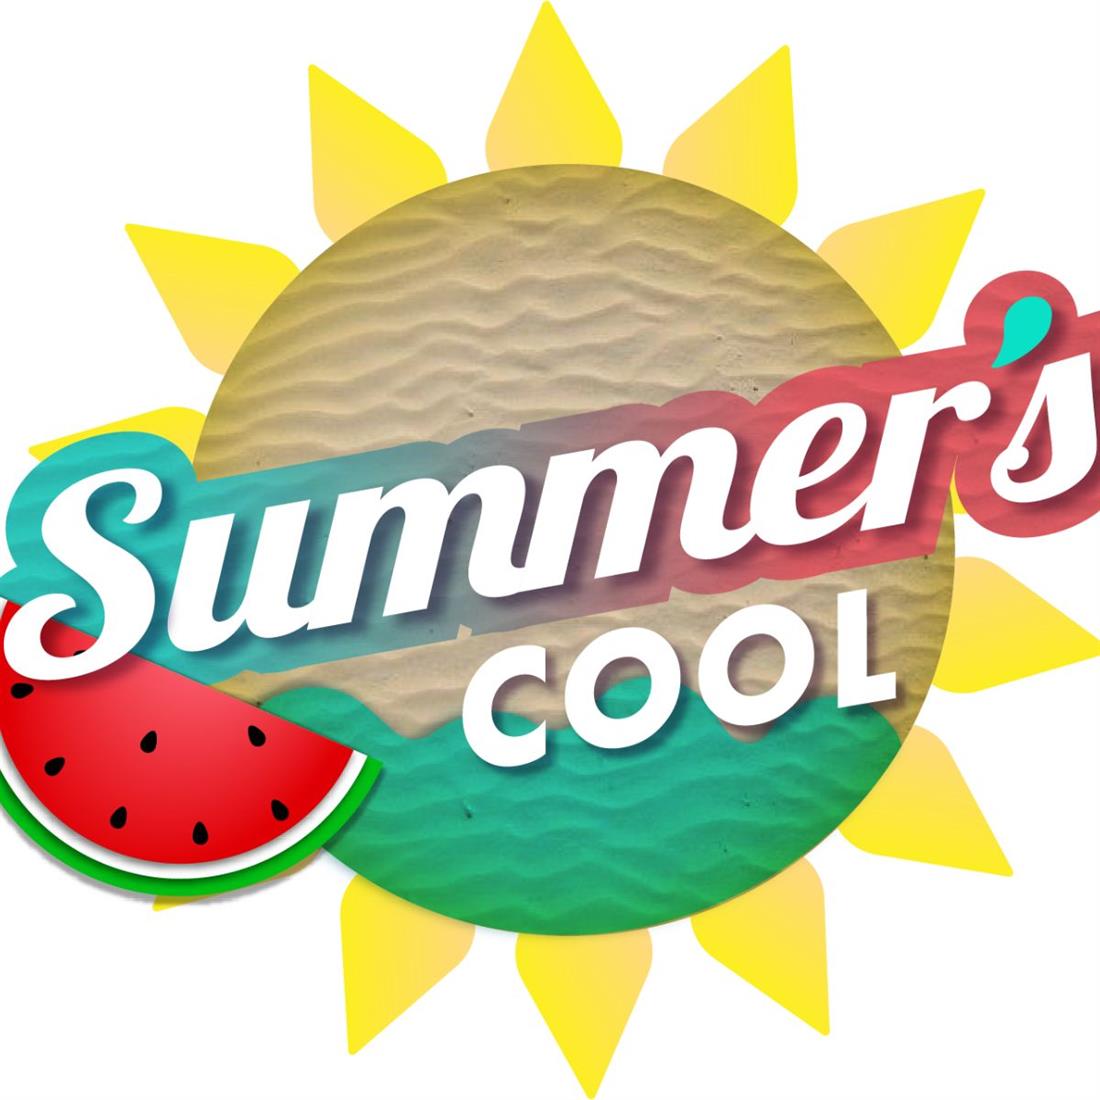 Summer’s Cool: Αυτή θα είναι η νέα καλοκαιρινή εκπομπή του ΣΚΑΪ - Η επίσημη ανακοίνωση για τους παρουσιαστές